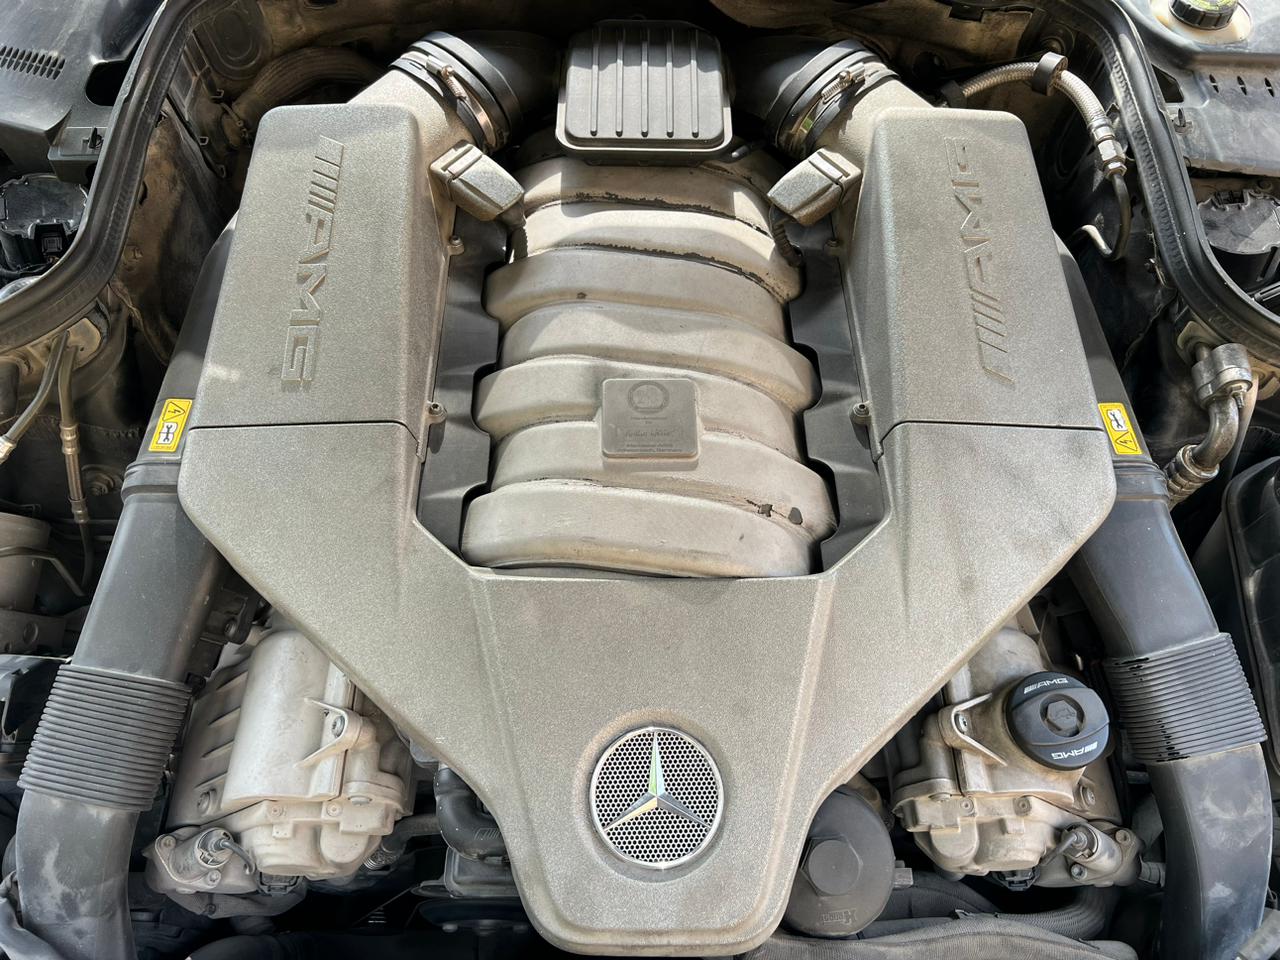 Mercedes CLS63 AMG